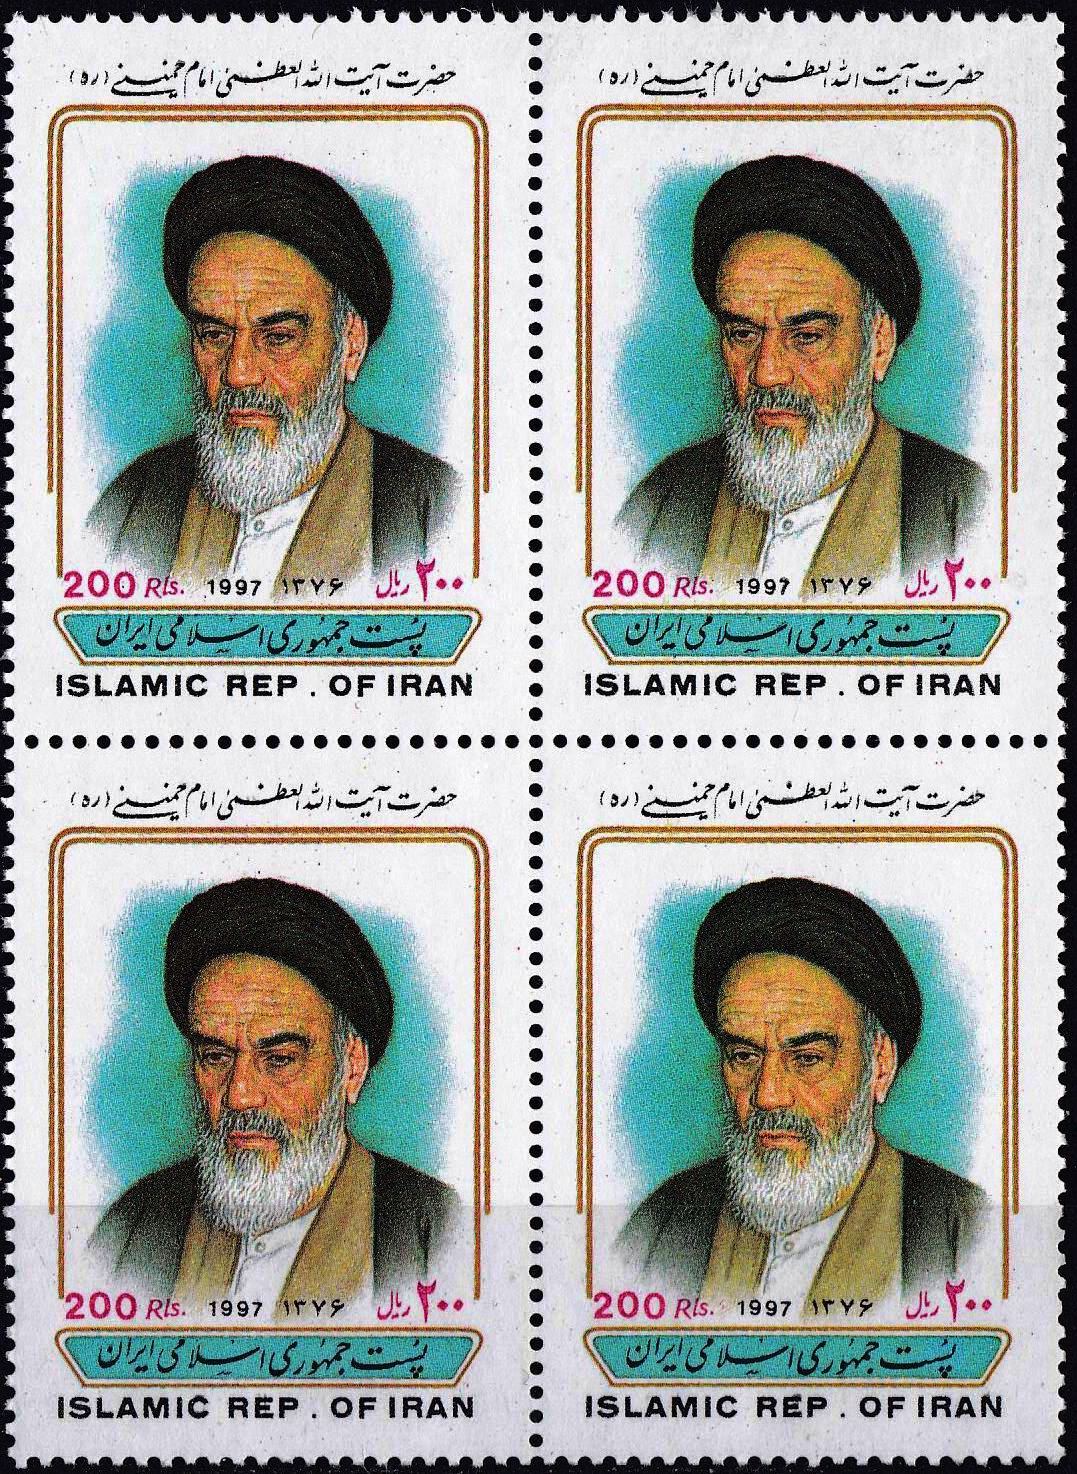 Iran 1997 Stamps Ayatollah Imam Khomeini Religious Leader